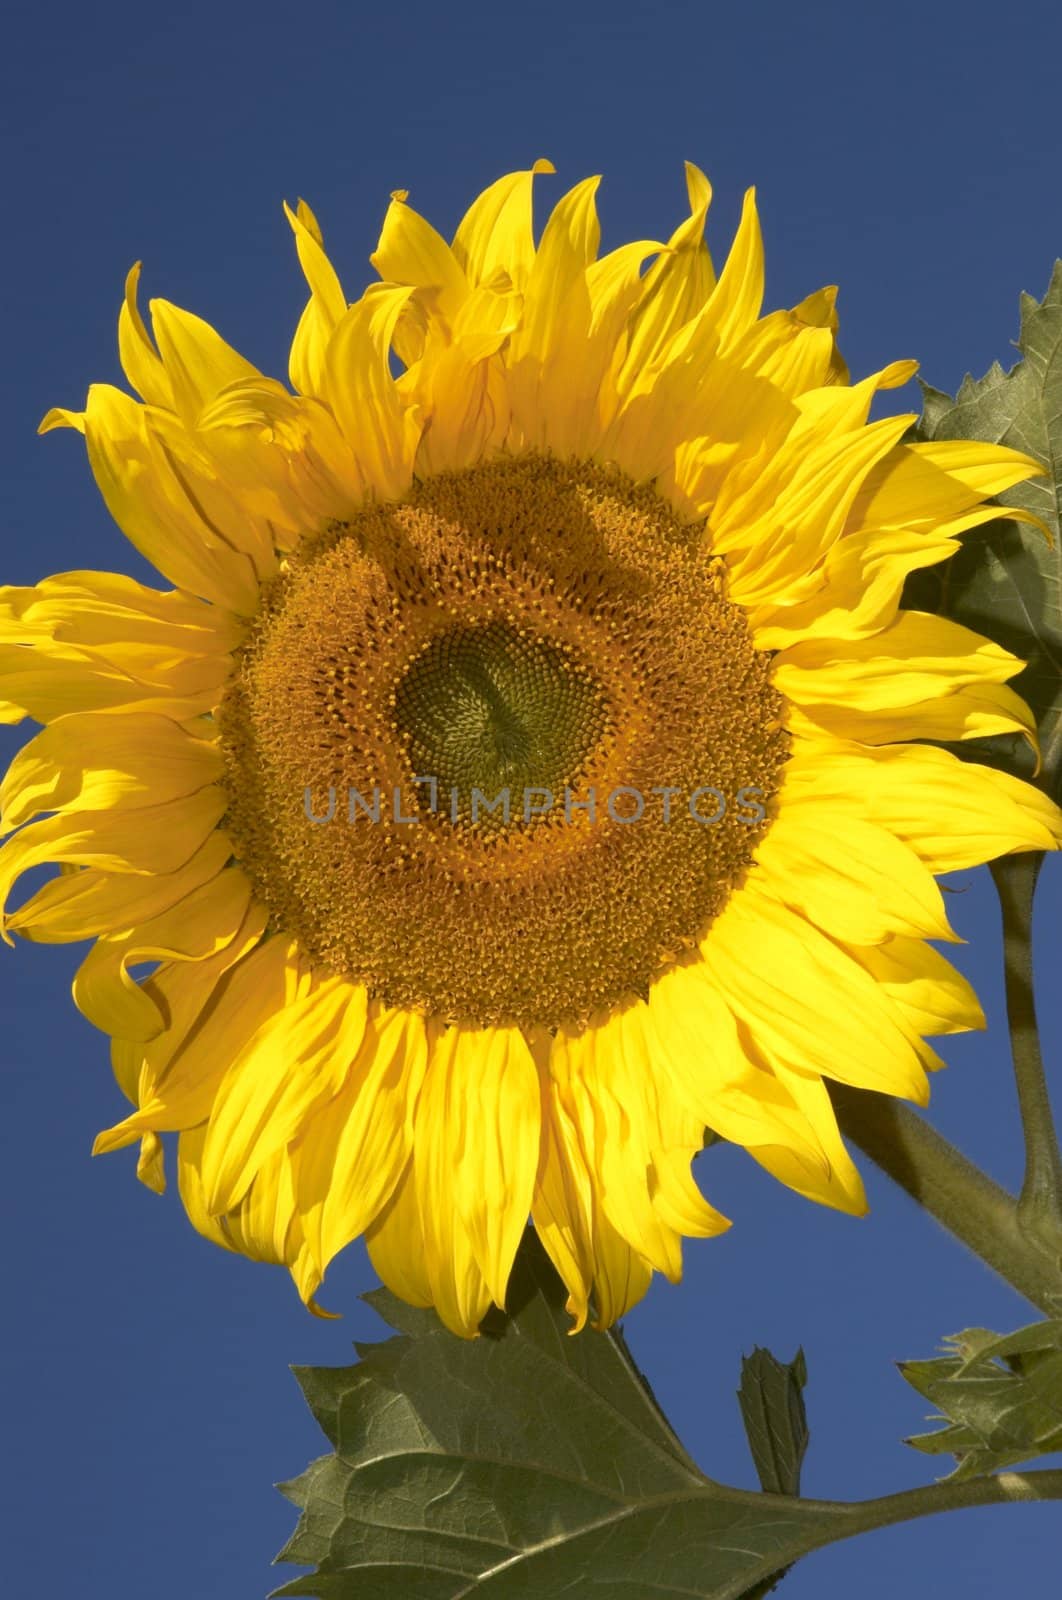 the sunflower by Kuzma